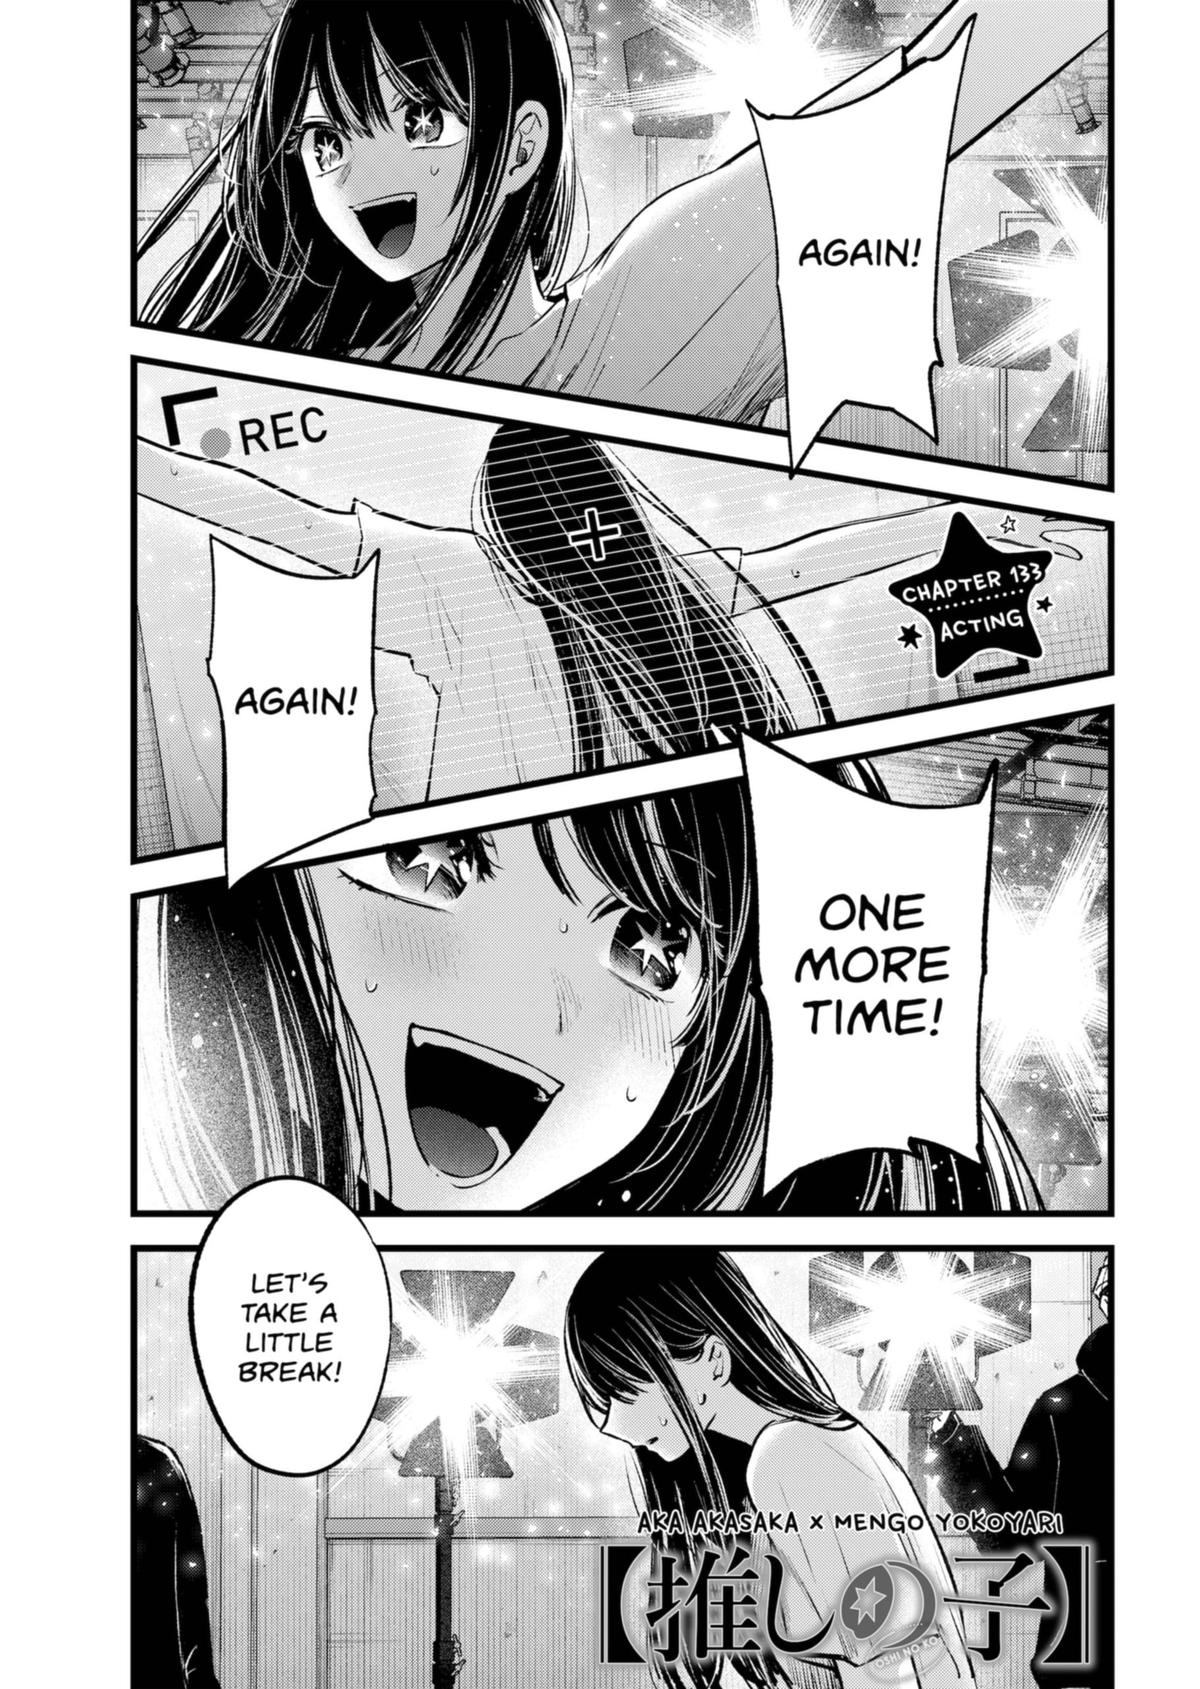 Oshi No Ko Manga Manga Chapter - 133 - image 1